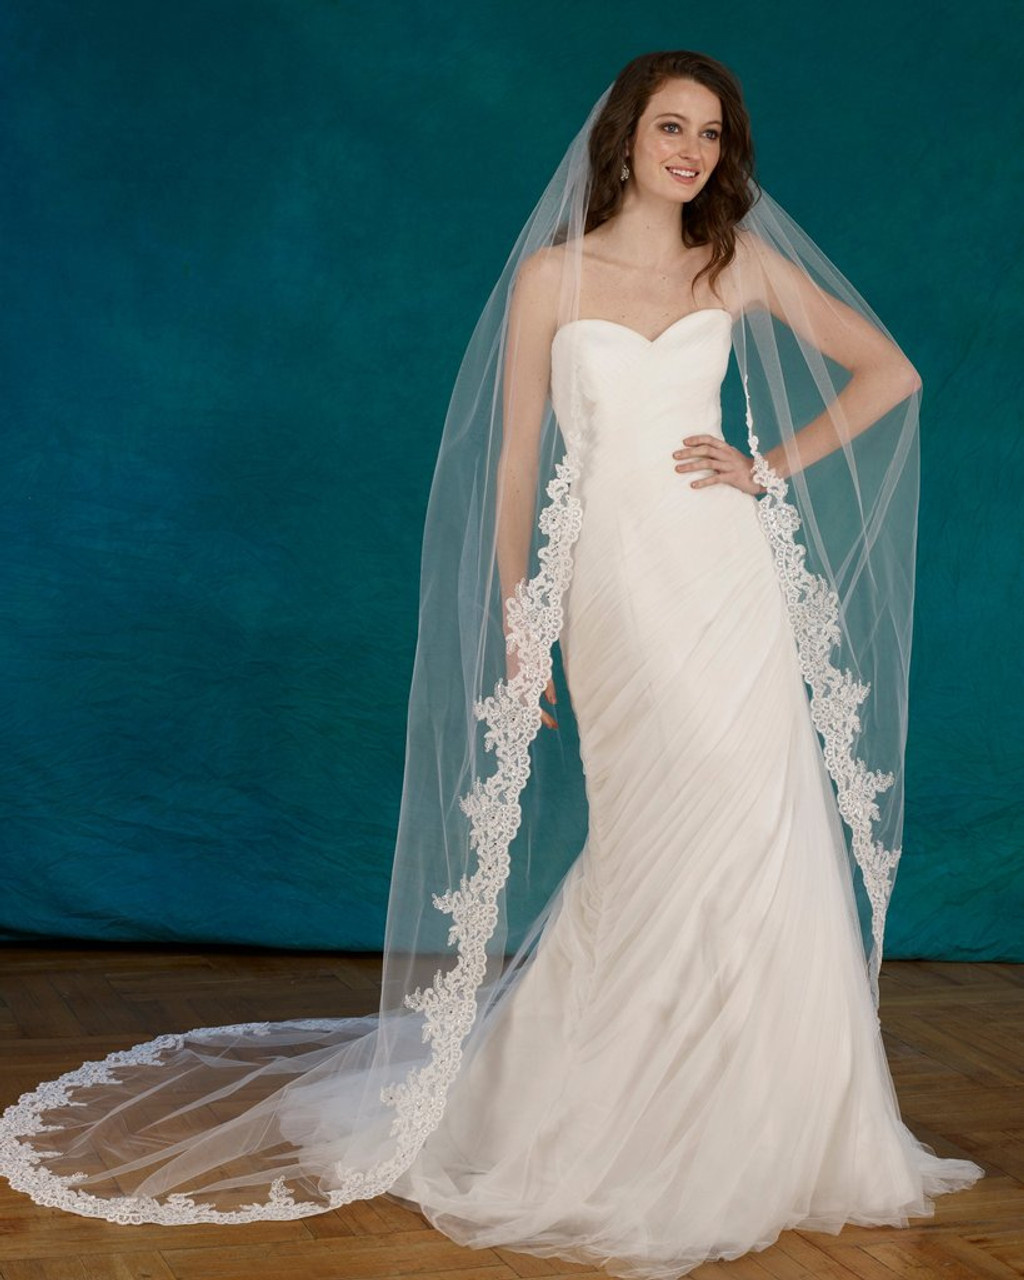 Marionat Bridal Veils 3700 - 108” Beaded alencon lace veil with rhinestones